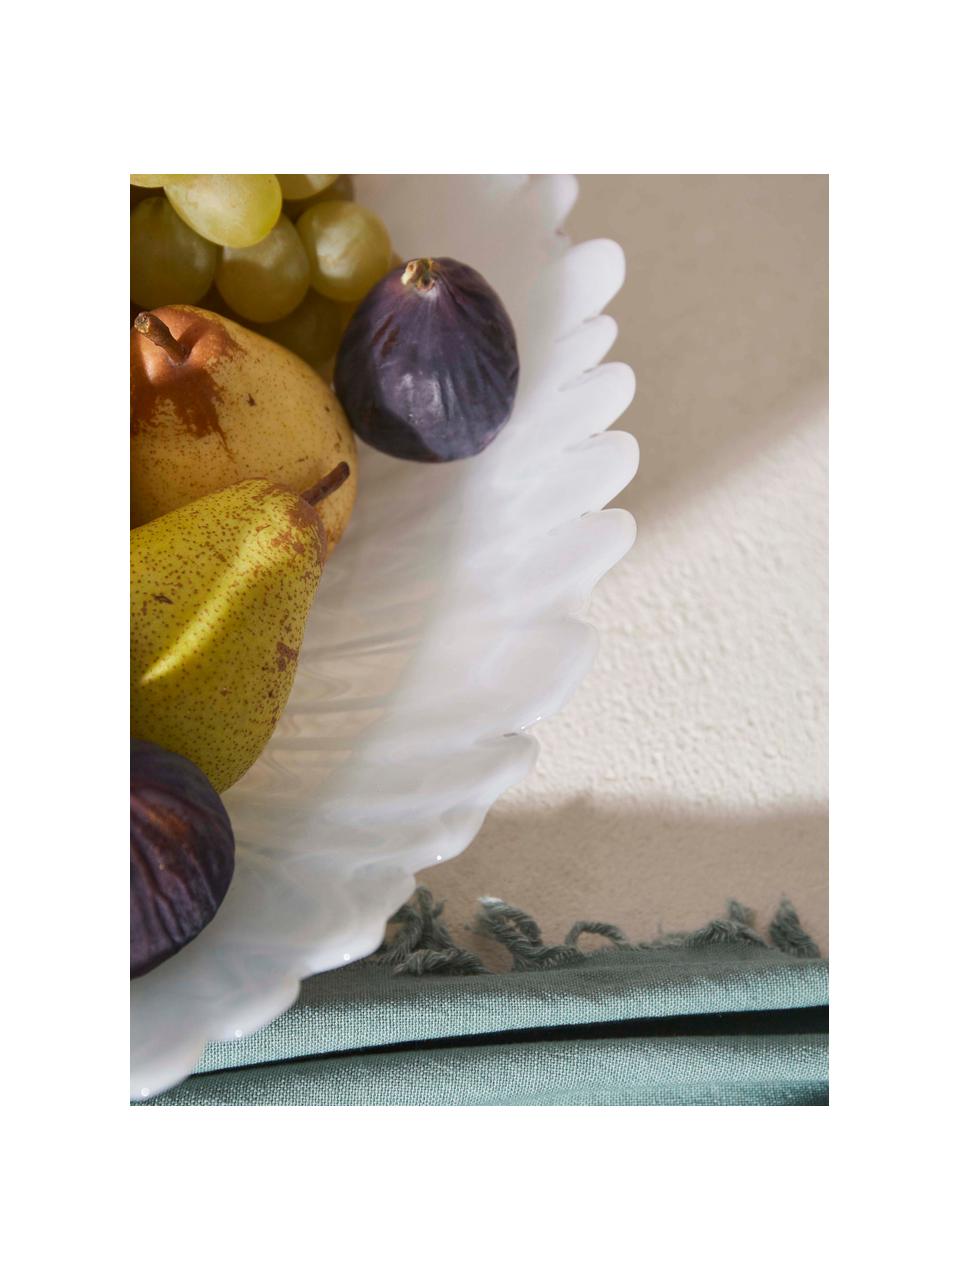 Piatto da portata in vetro Fleur, Vetro, Bianco, Larg. 38 x Alt. 8 cm